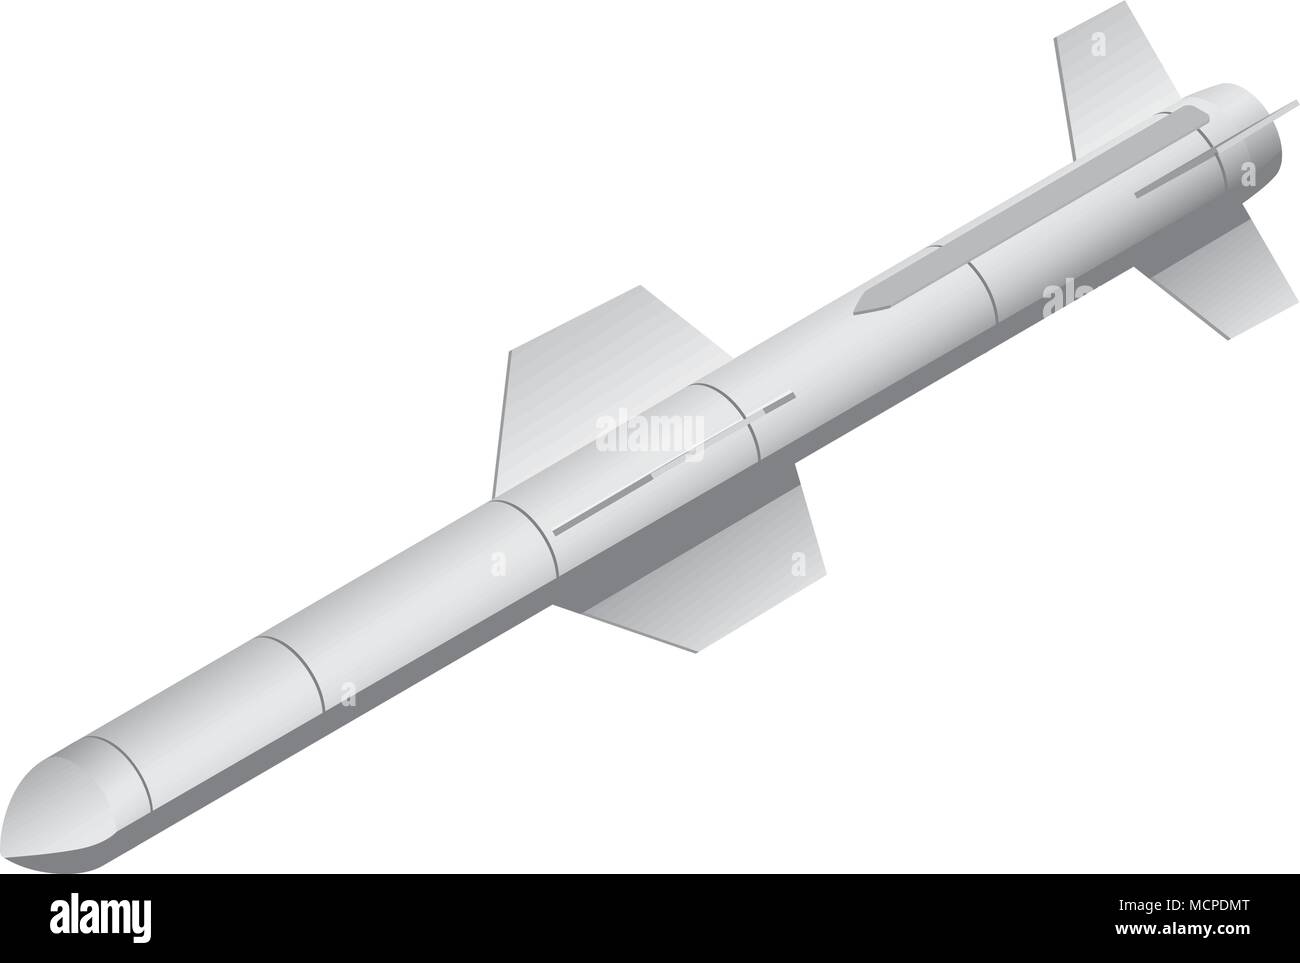 Military Long-range Missile Rocket Vector Illustration Stock Vector